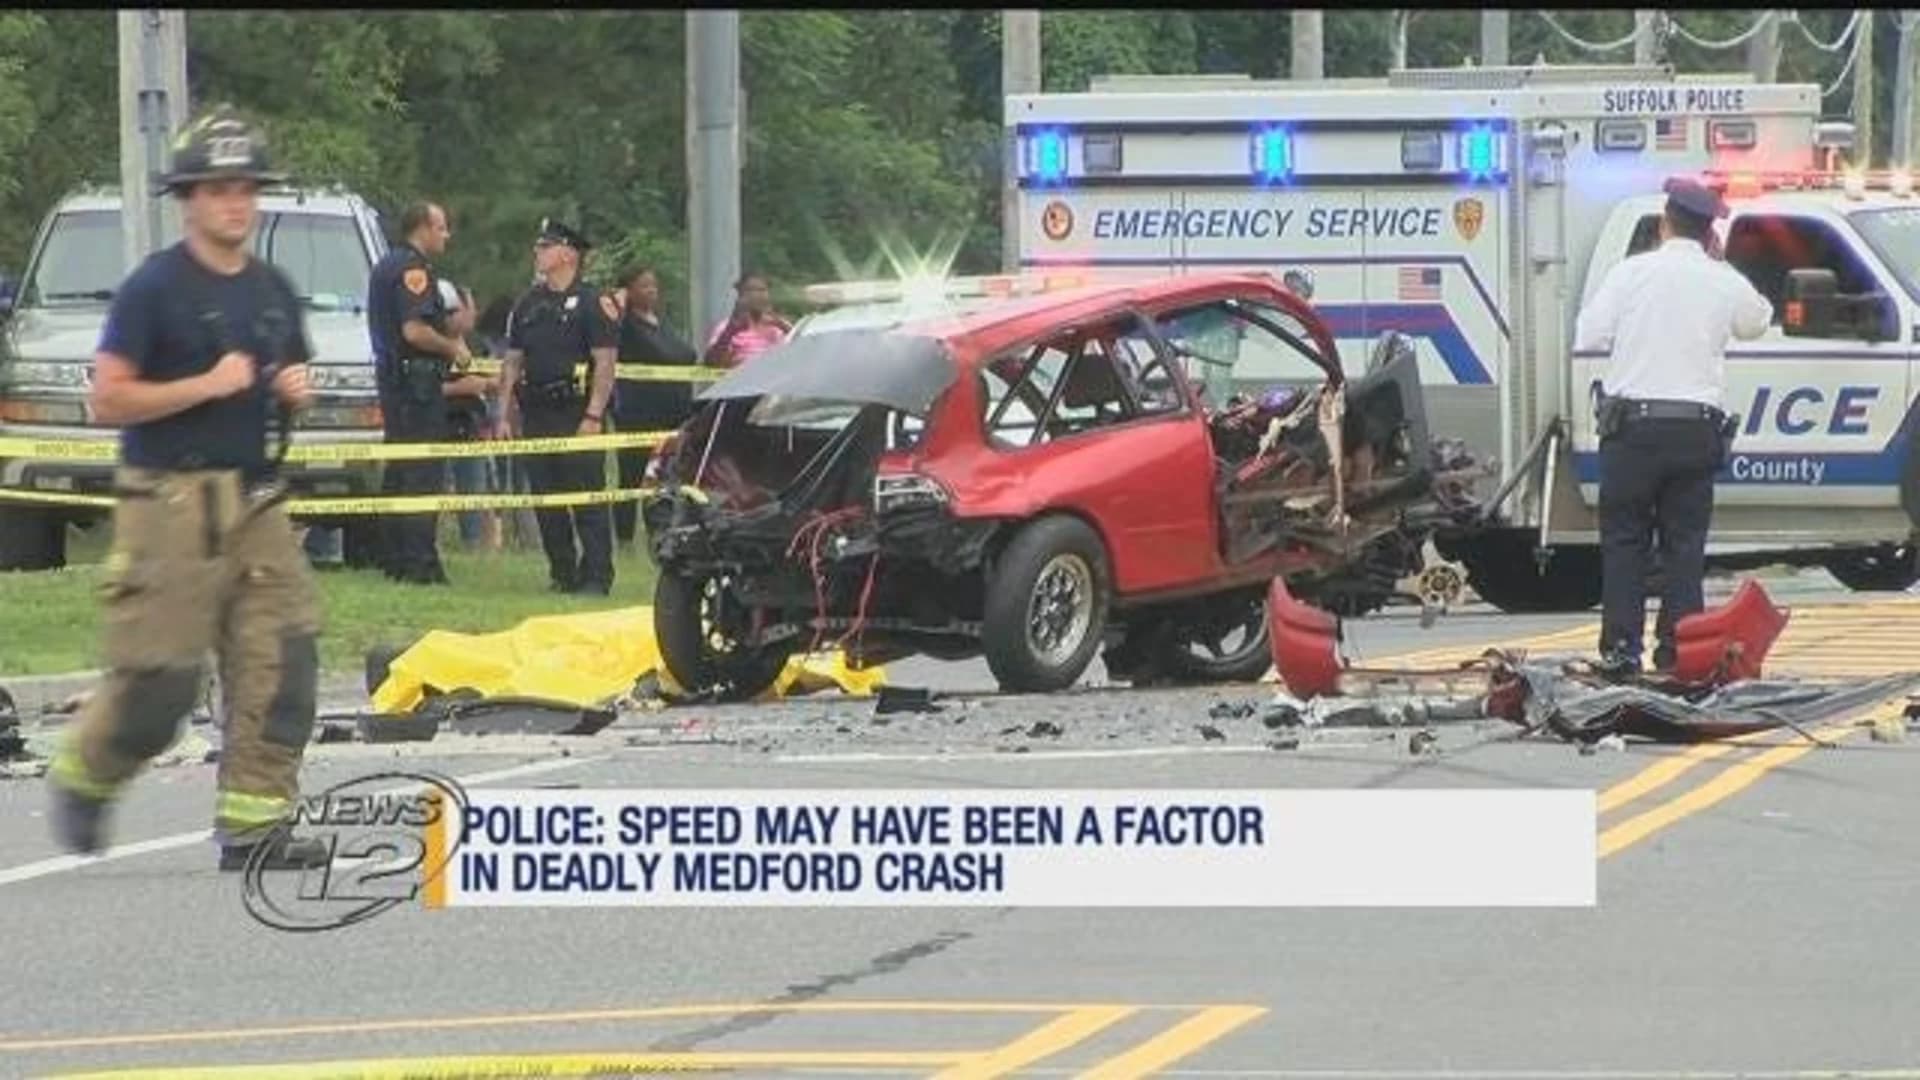 Police eye speed as factor in deadly Medford crash